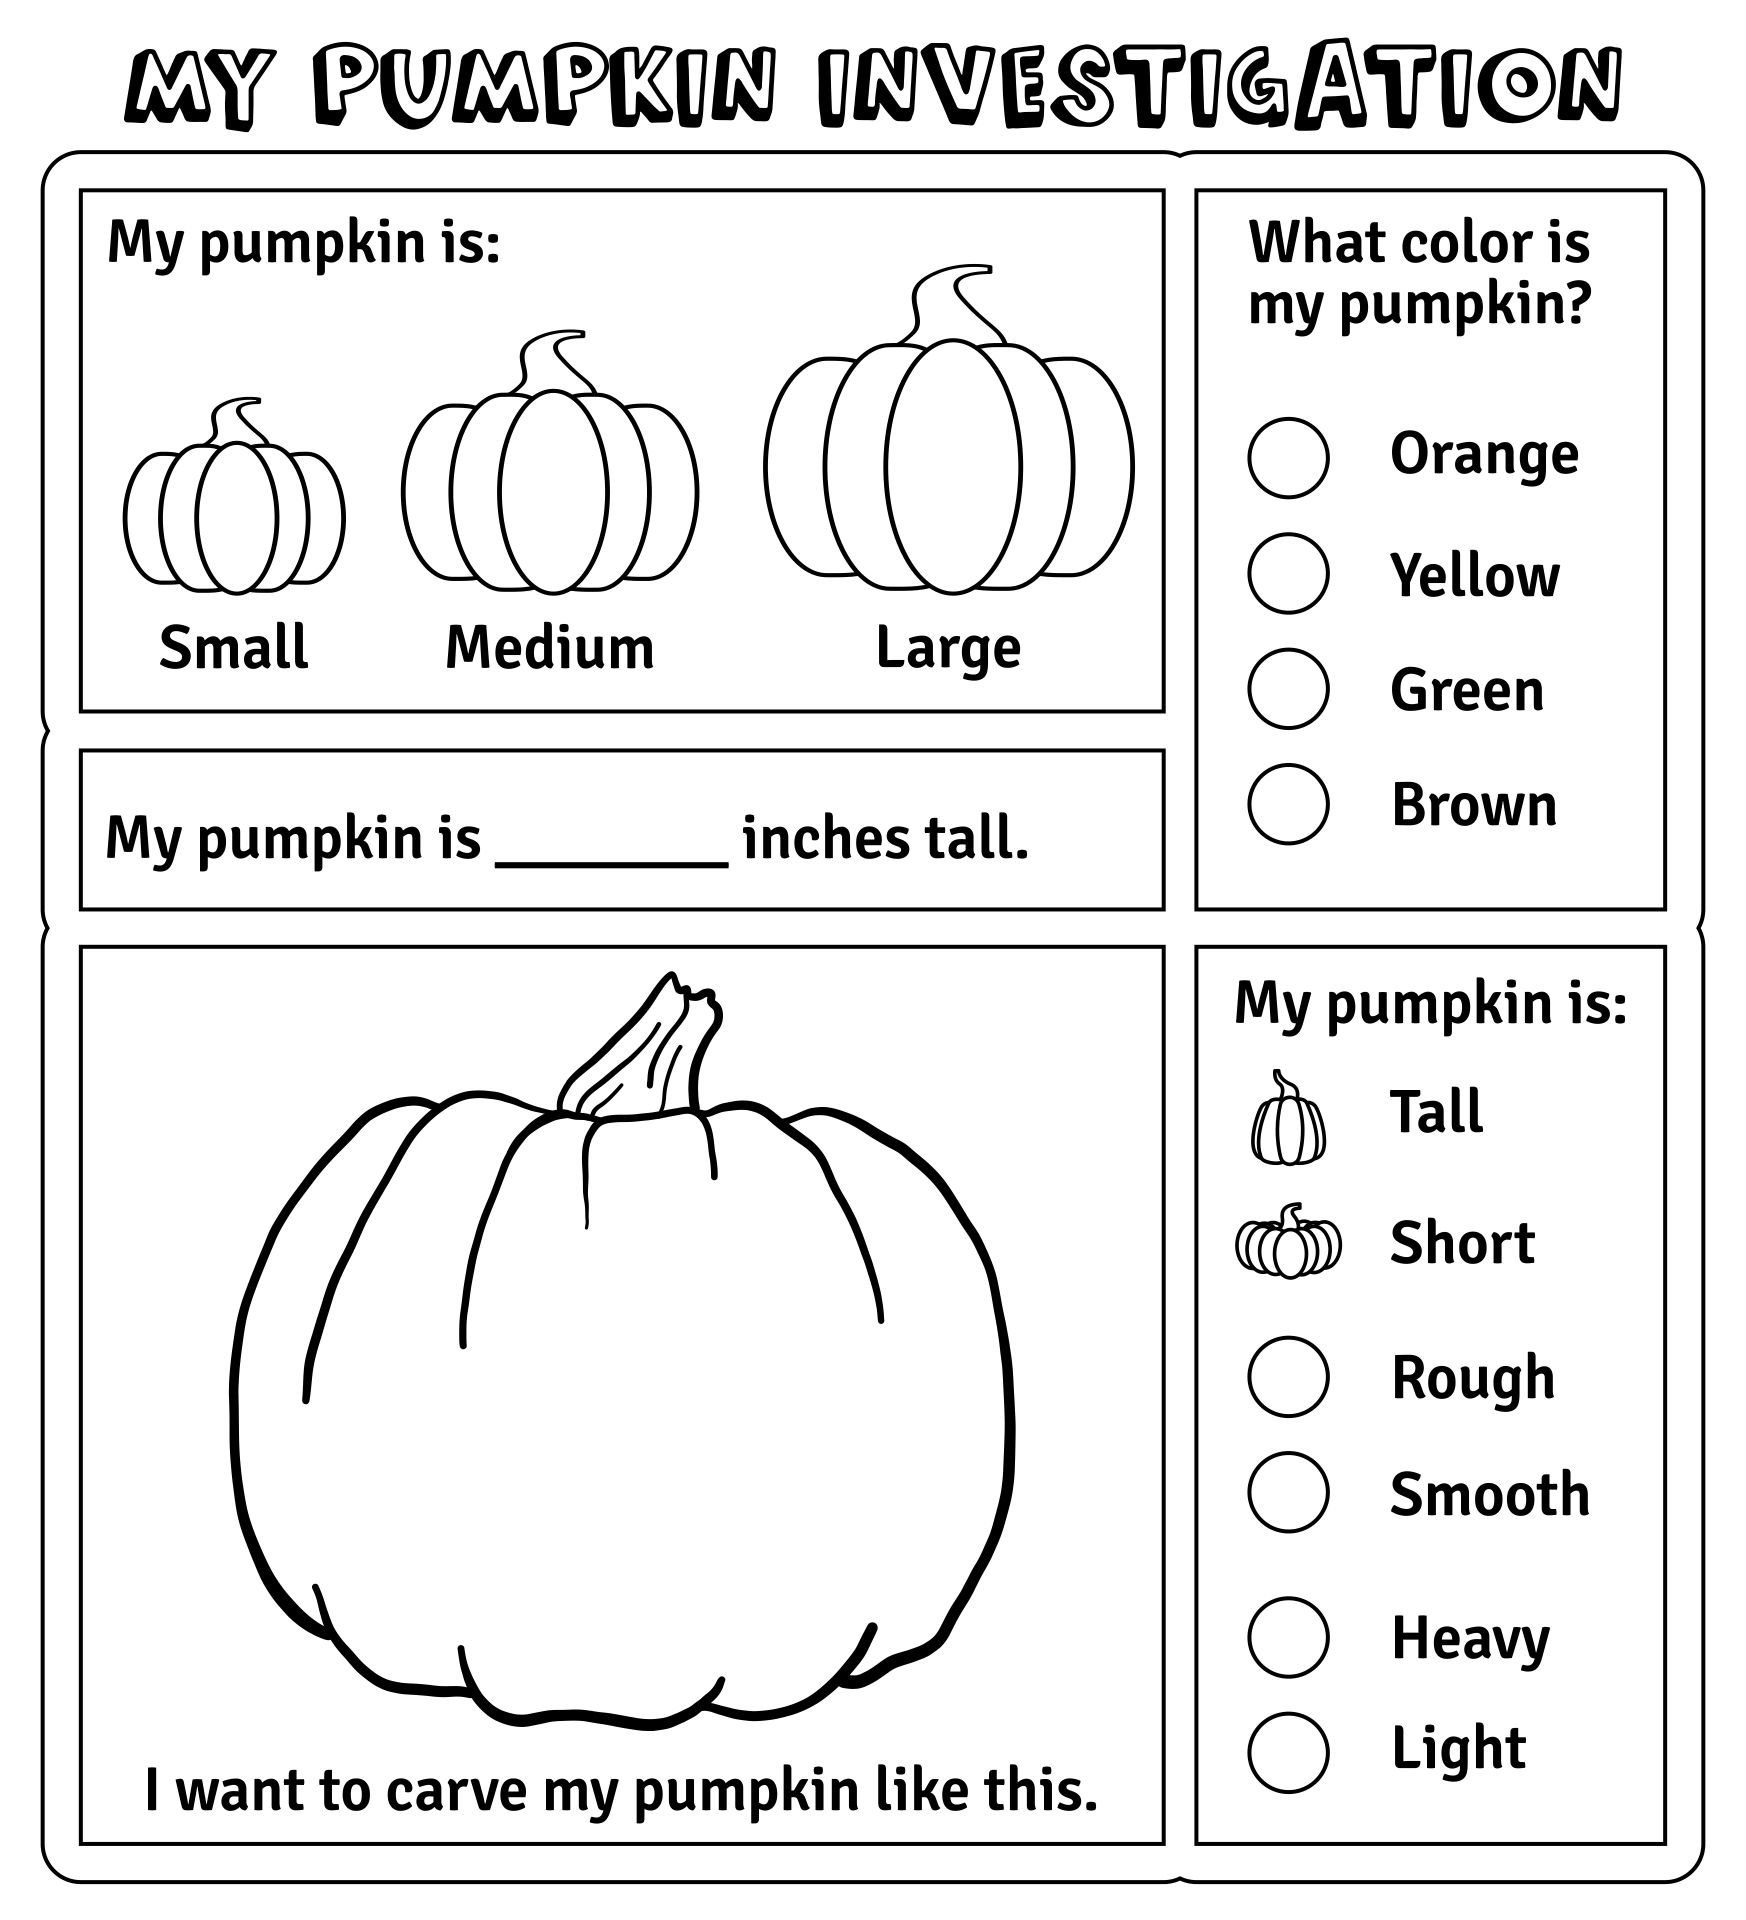 Pumpkin Investigation Activity